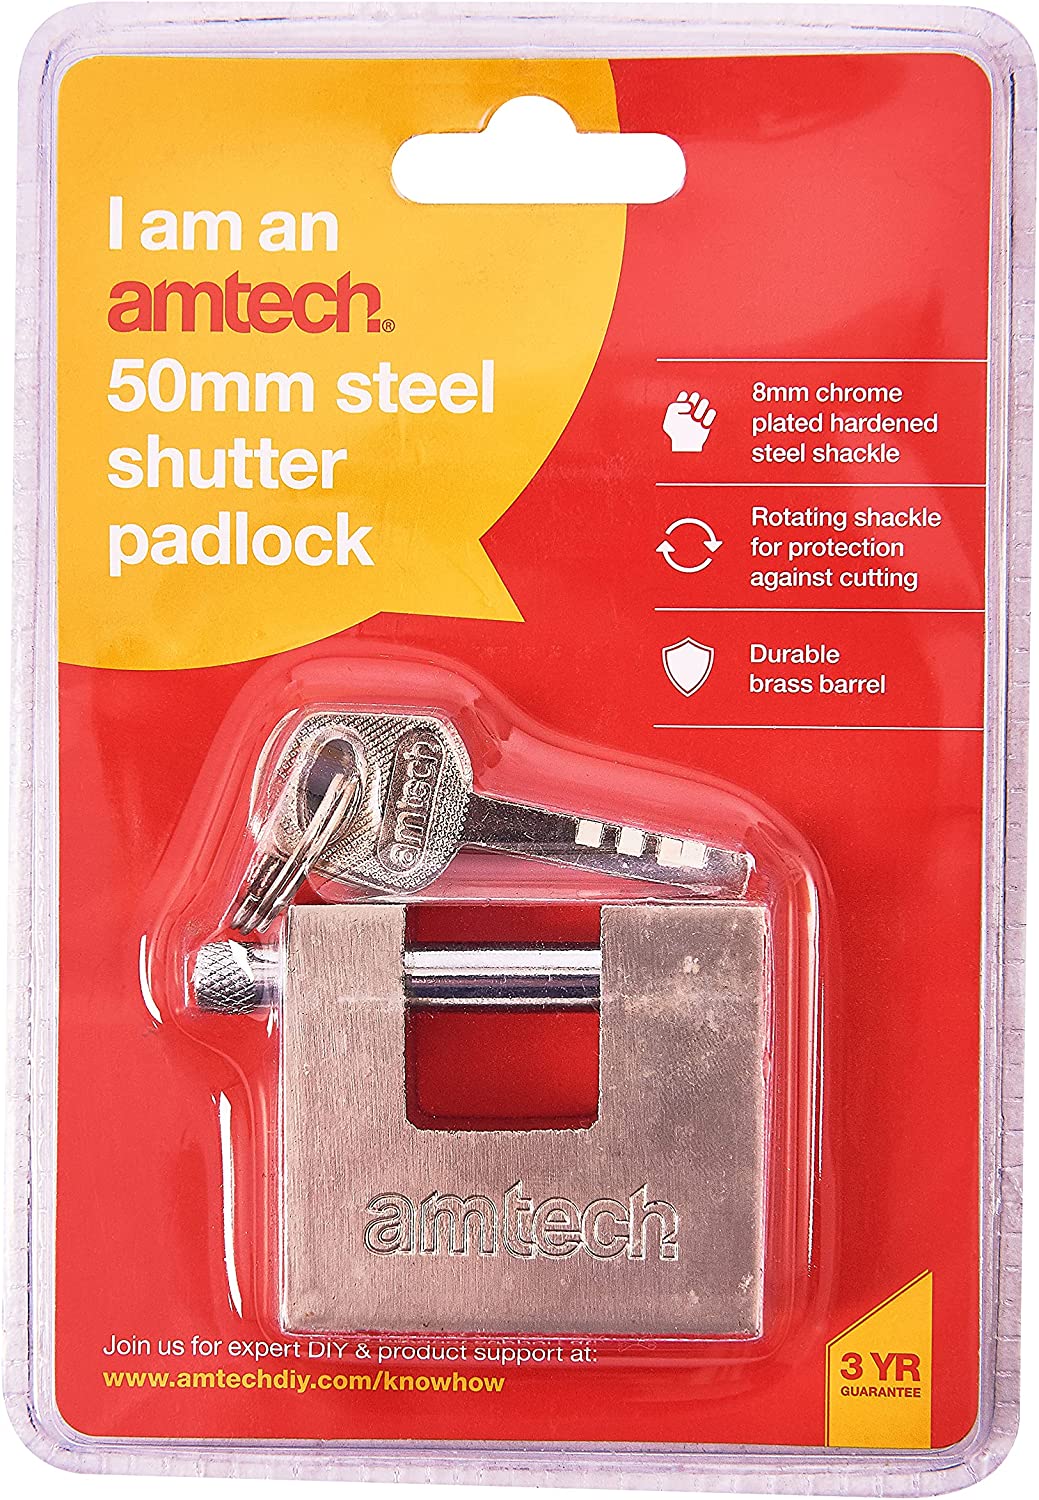 Amtech T1675 50mm Steel Shutter Padlock